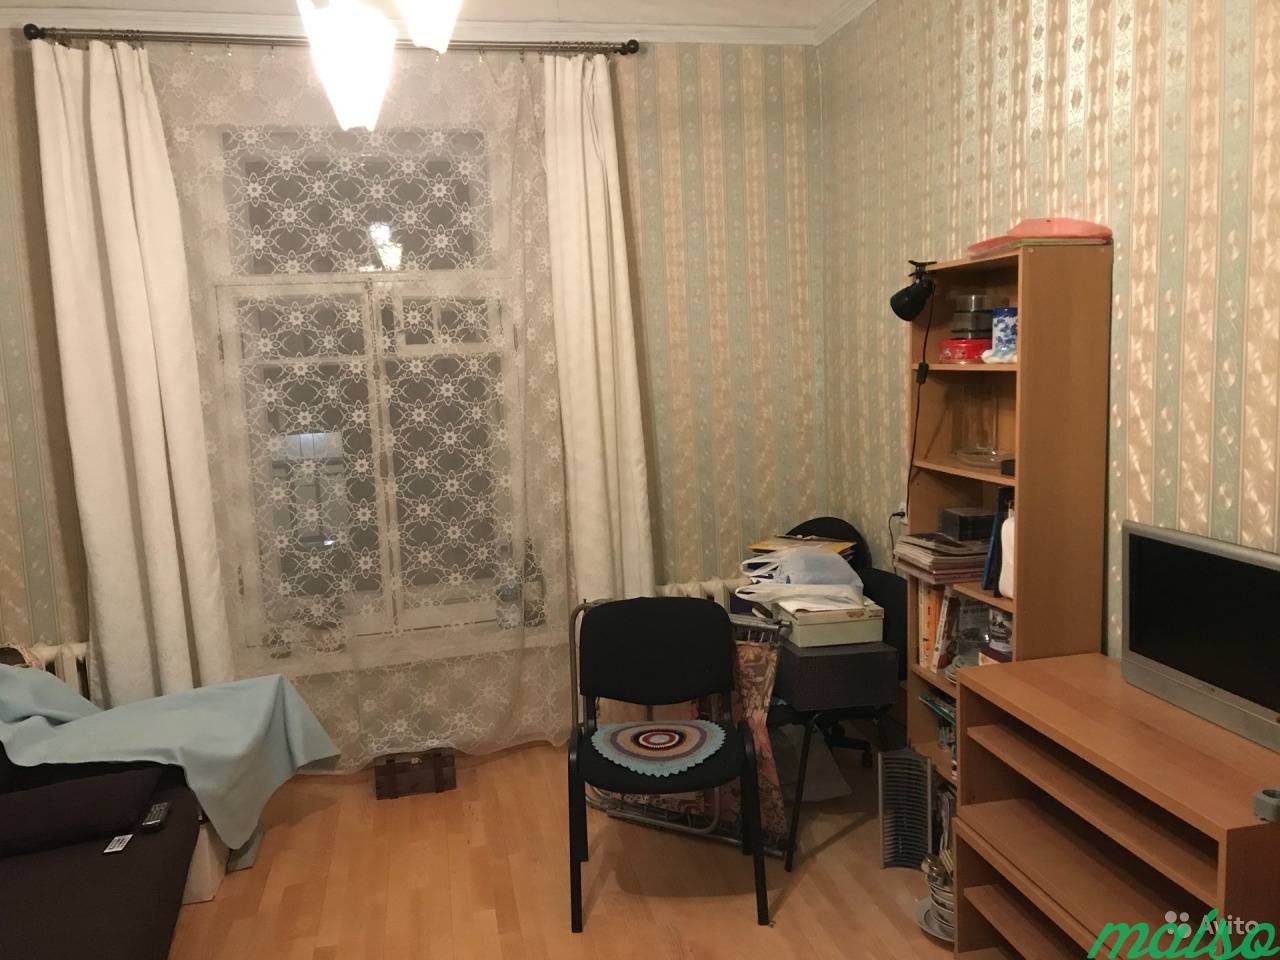 Комната 15.9 м² в 4-к, 5/6 эт. в Санкт-Петербурге. Фото 7